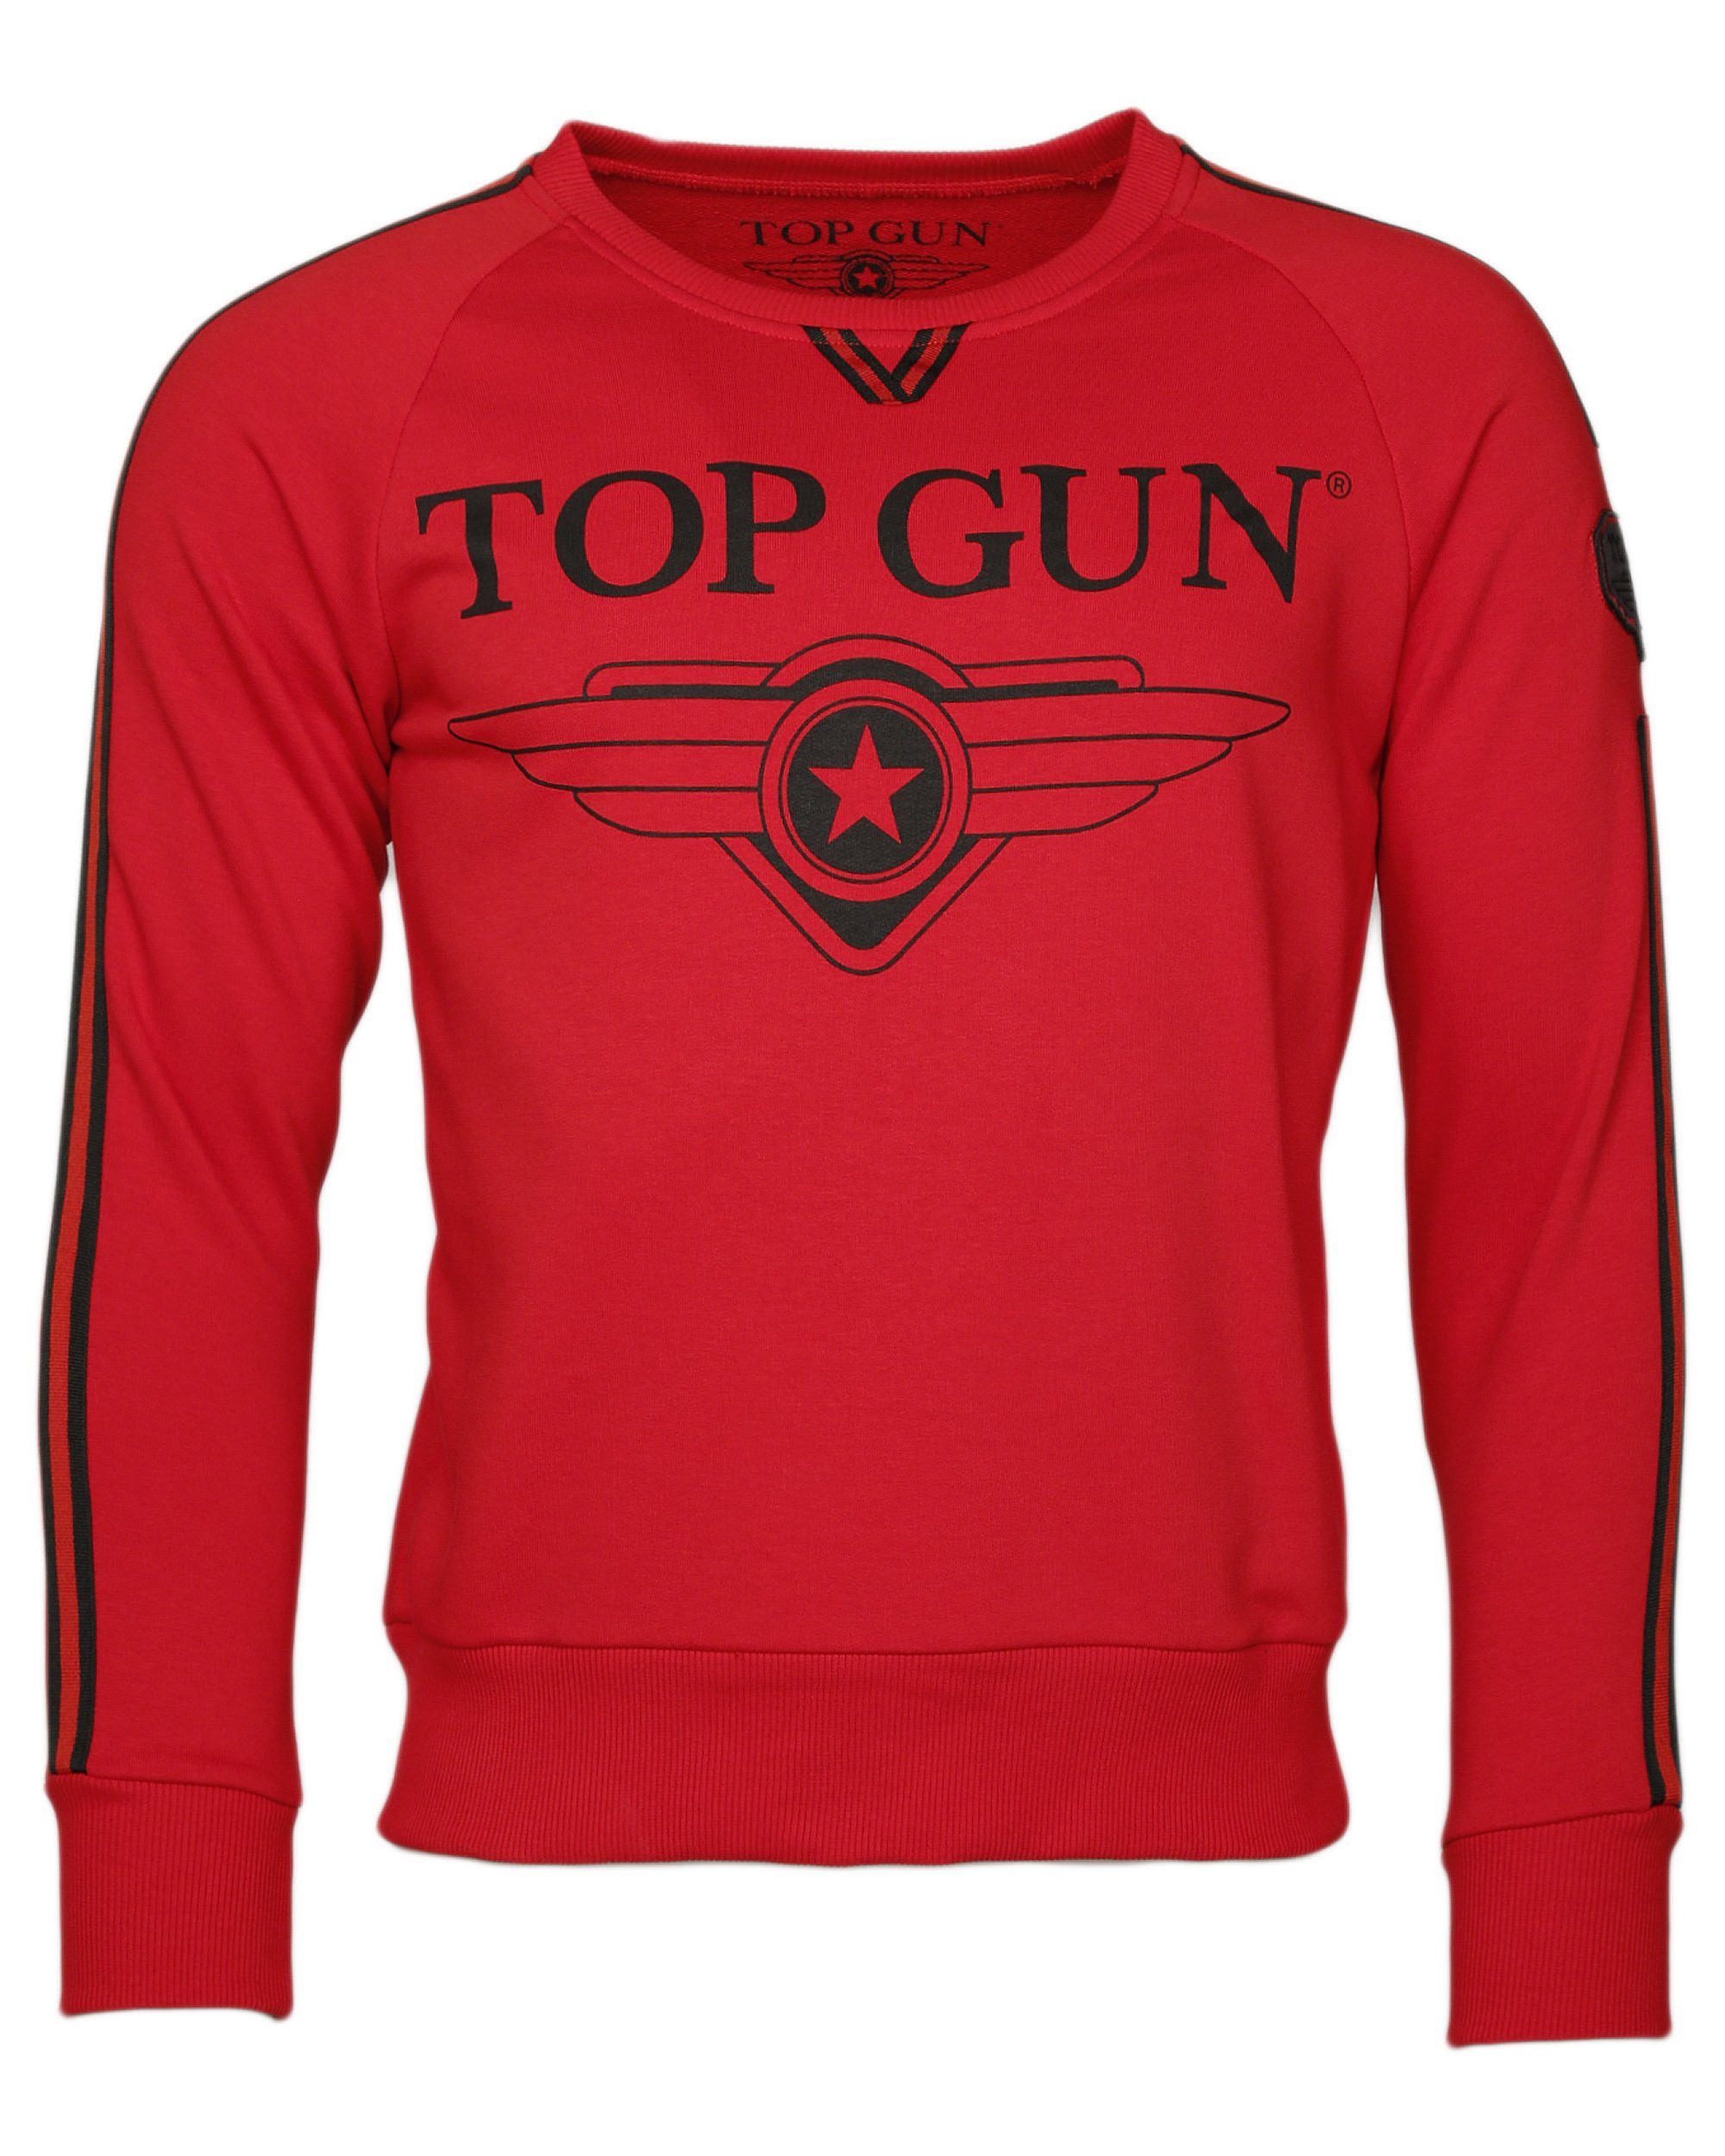 TOP GUN Streak red TG20191013 Sweater